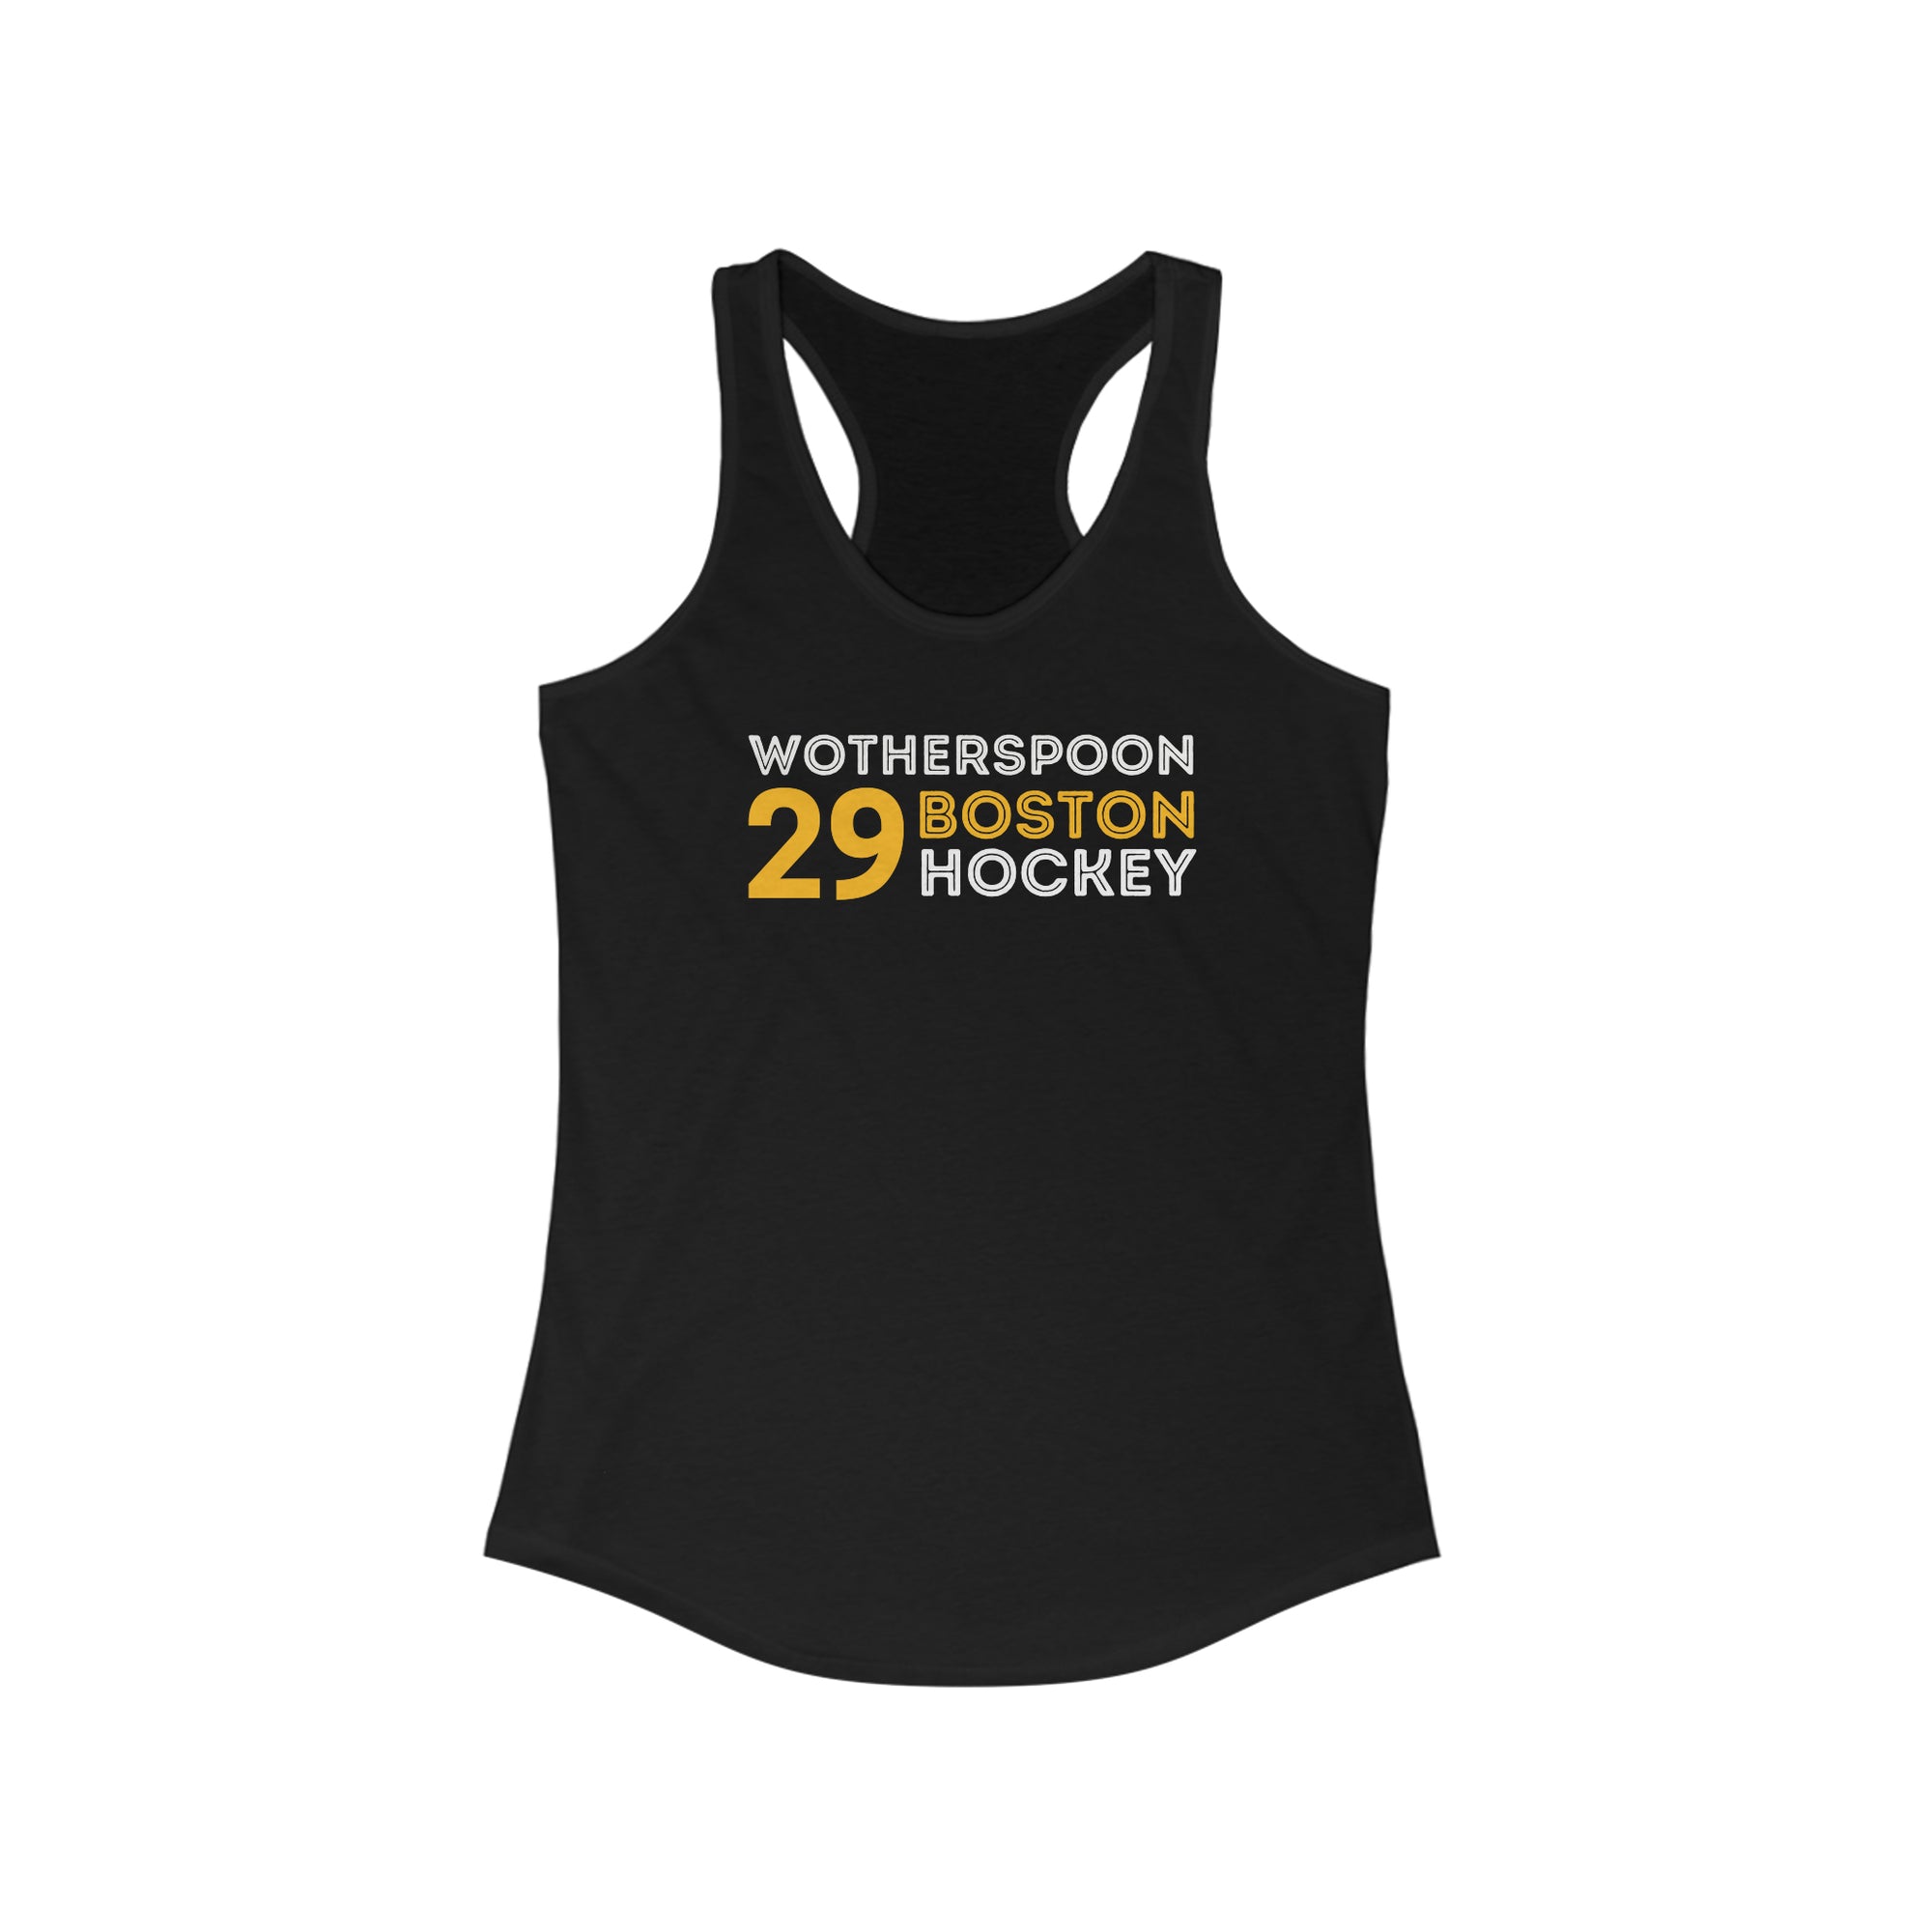 Wotherspoon 29 Boston Hockey Grafitti Wall Design Women's Ideal Racerback Tank Top